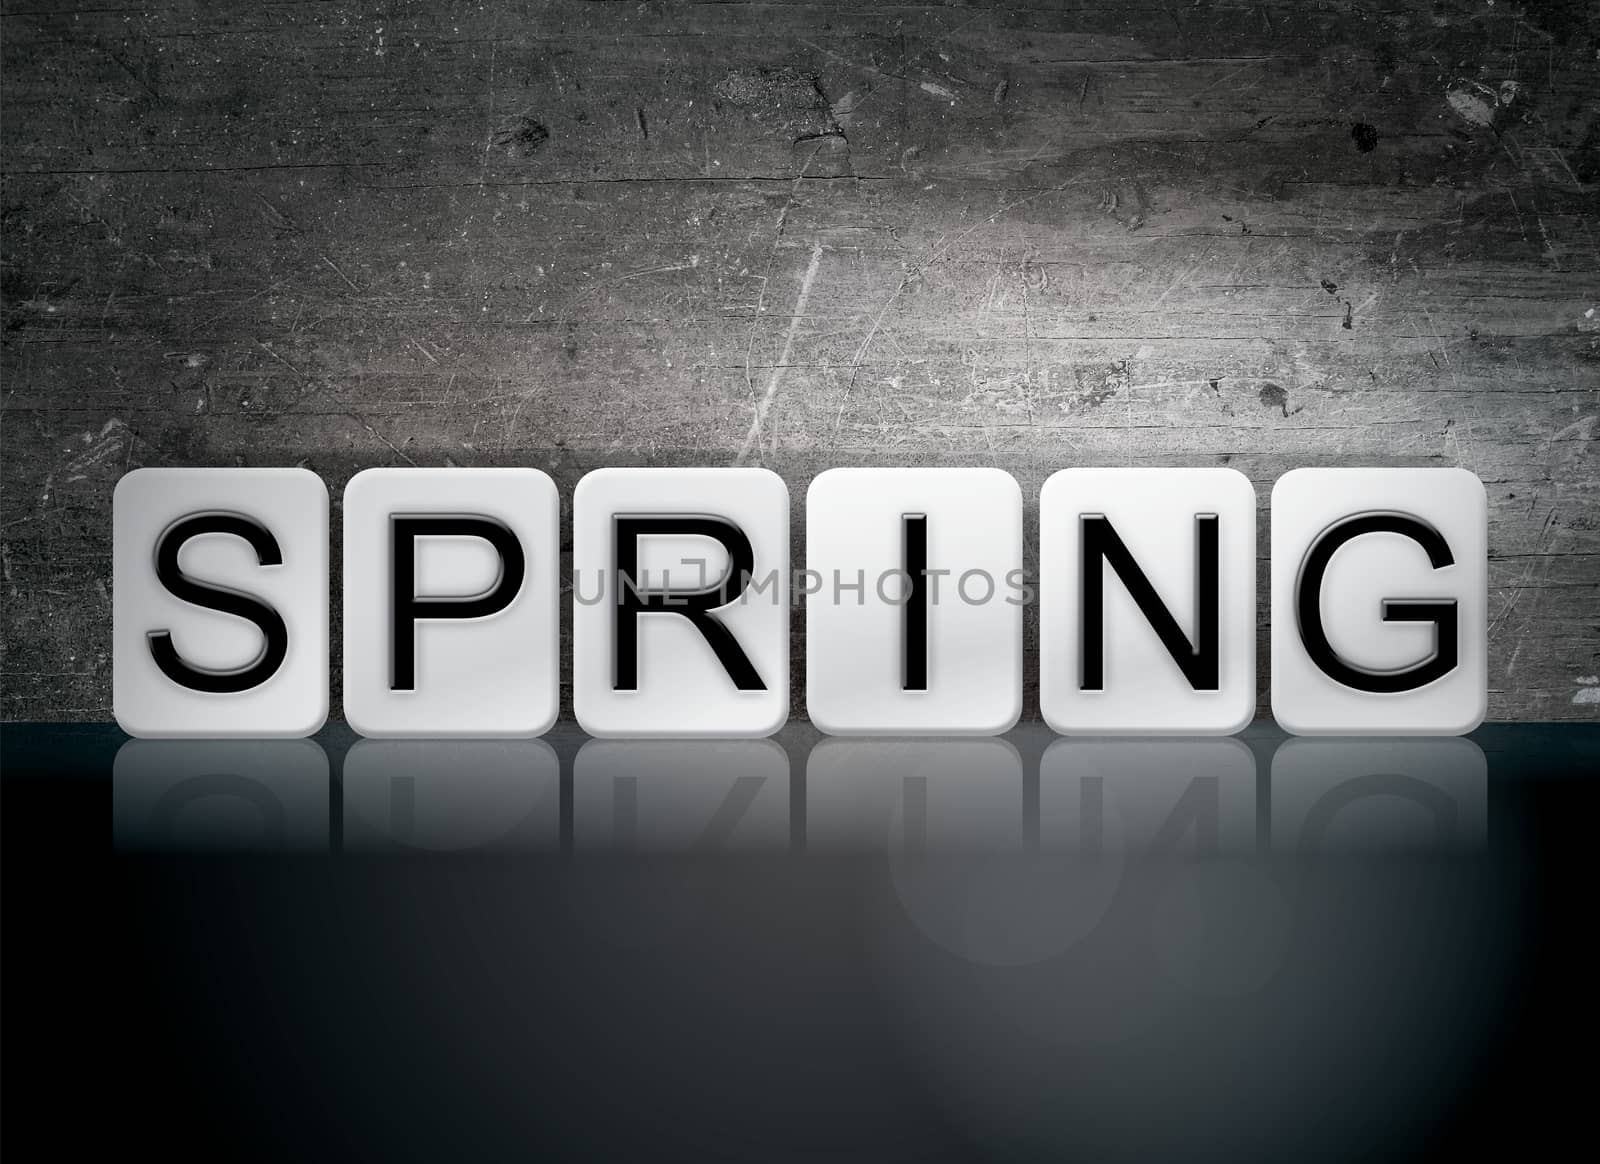 The word "Spring" written in white tiles against a dark vintage grunge background.